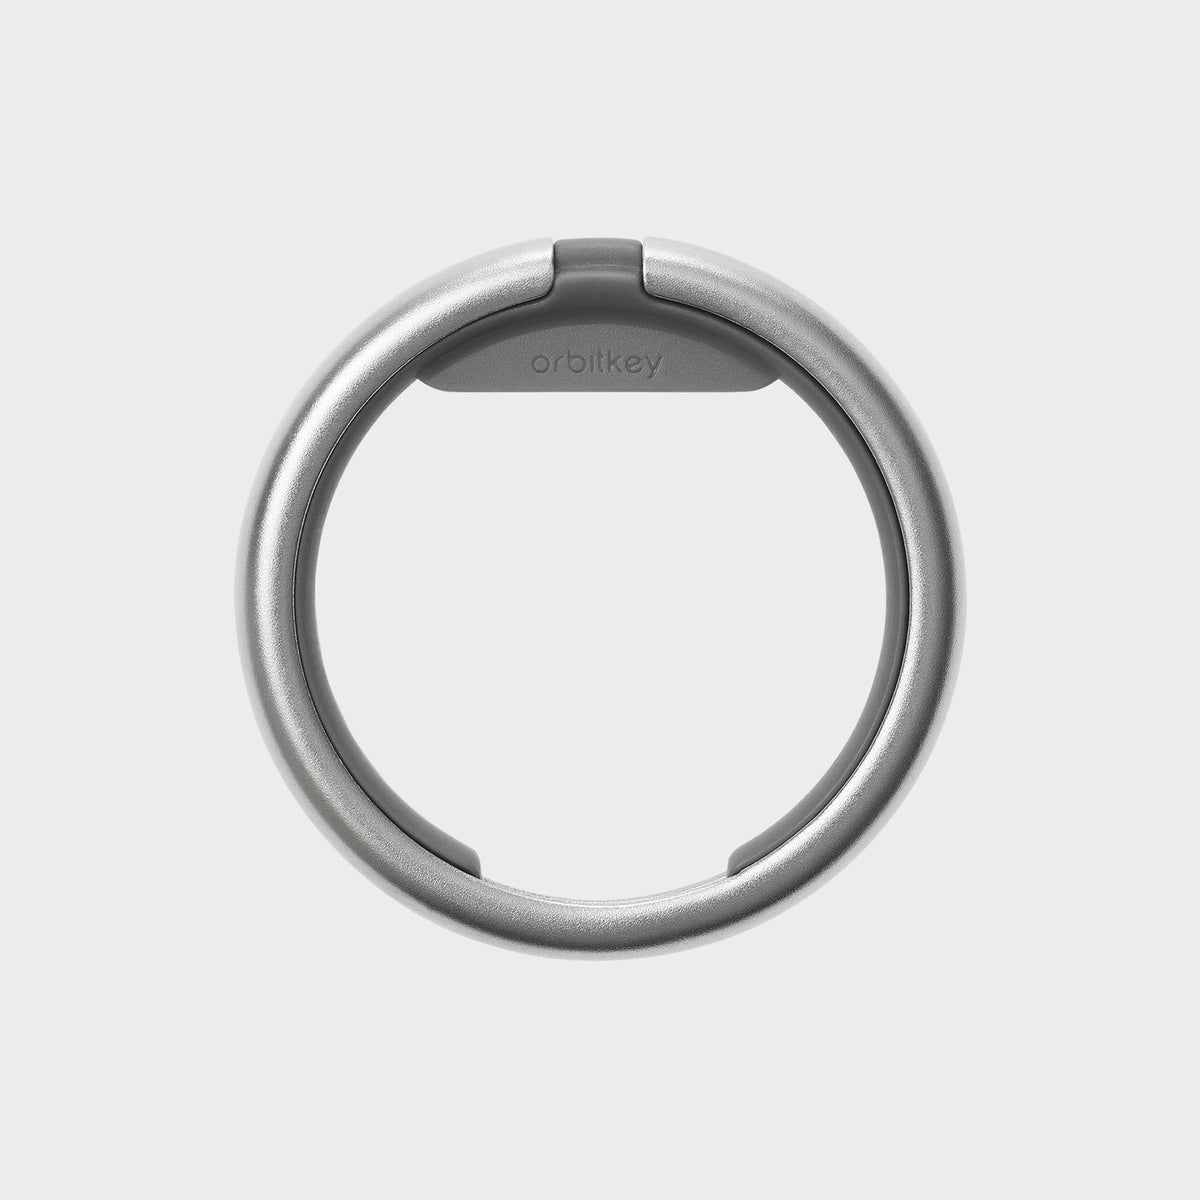 50 Pieces Key Rings Key Chain Rings Small Keyring Split Ring for Keys  Organization, 10 mm, Silver Color